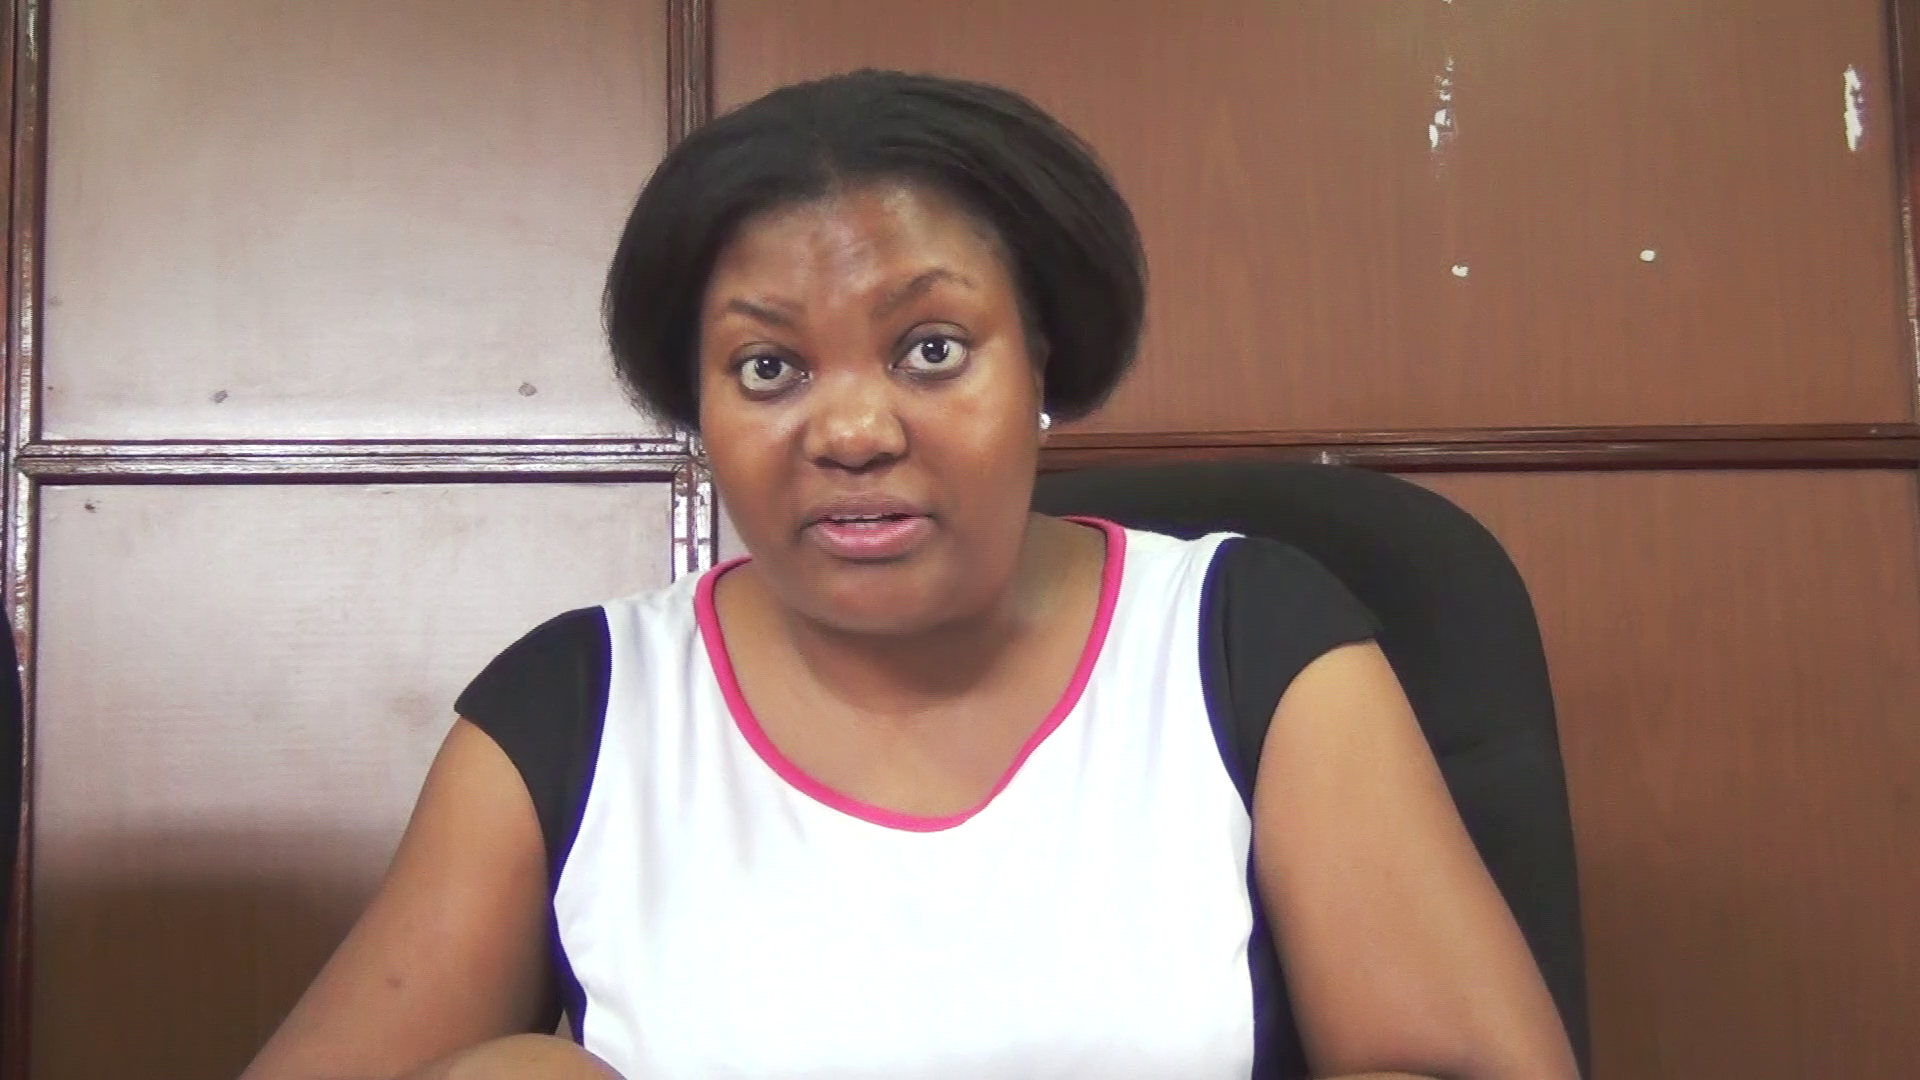 DEC Public Relations Officer Theresa Katongo